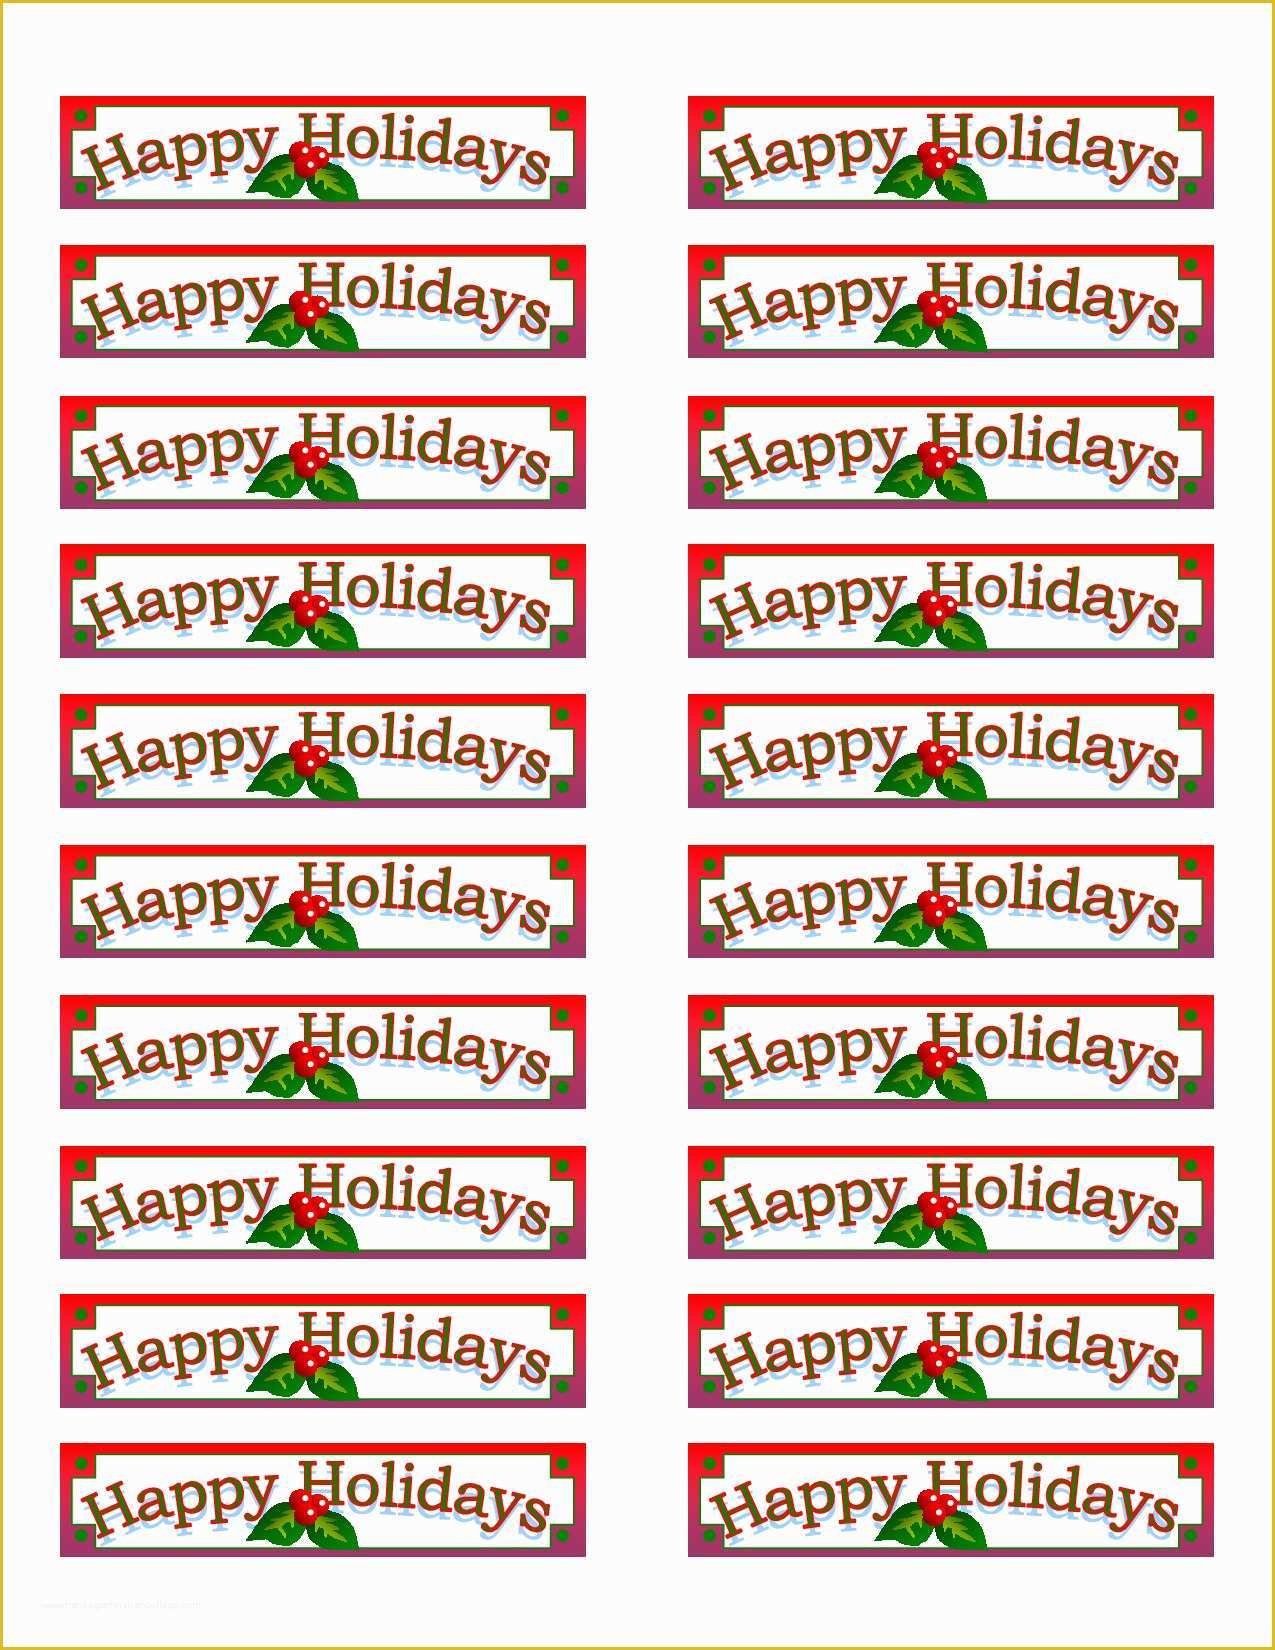 Free Christmas Return Address Label Templates 30 Per Sheet Of Christmas Address Label Template Avery 5160 Templates